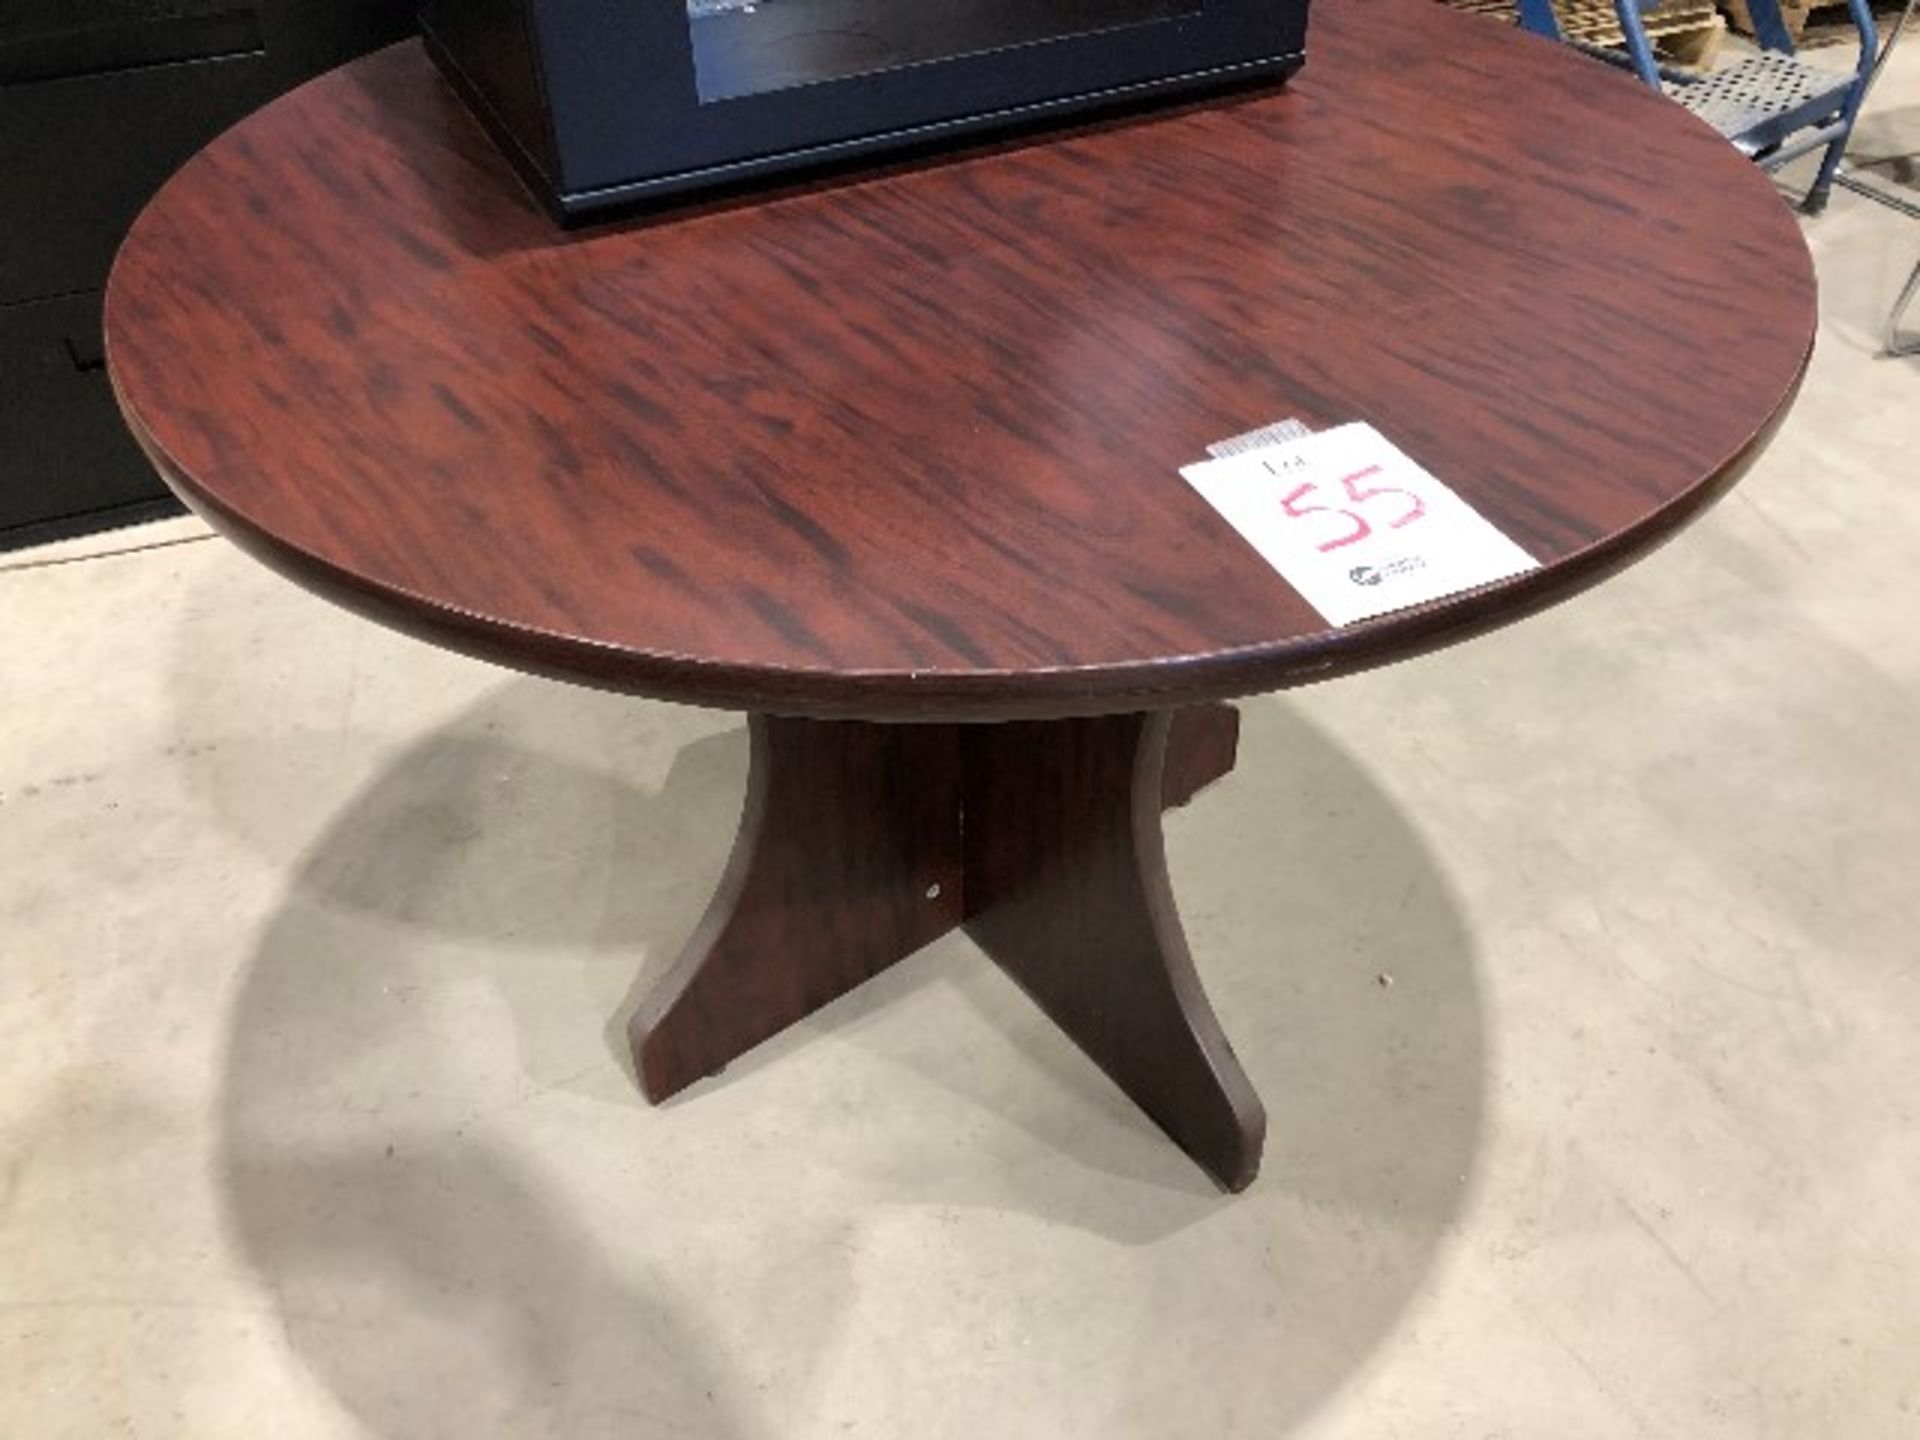 Round table, diameter 42”